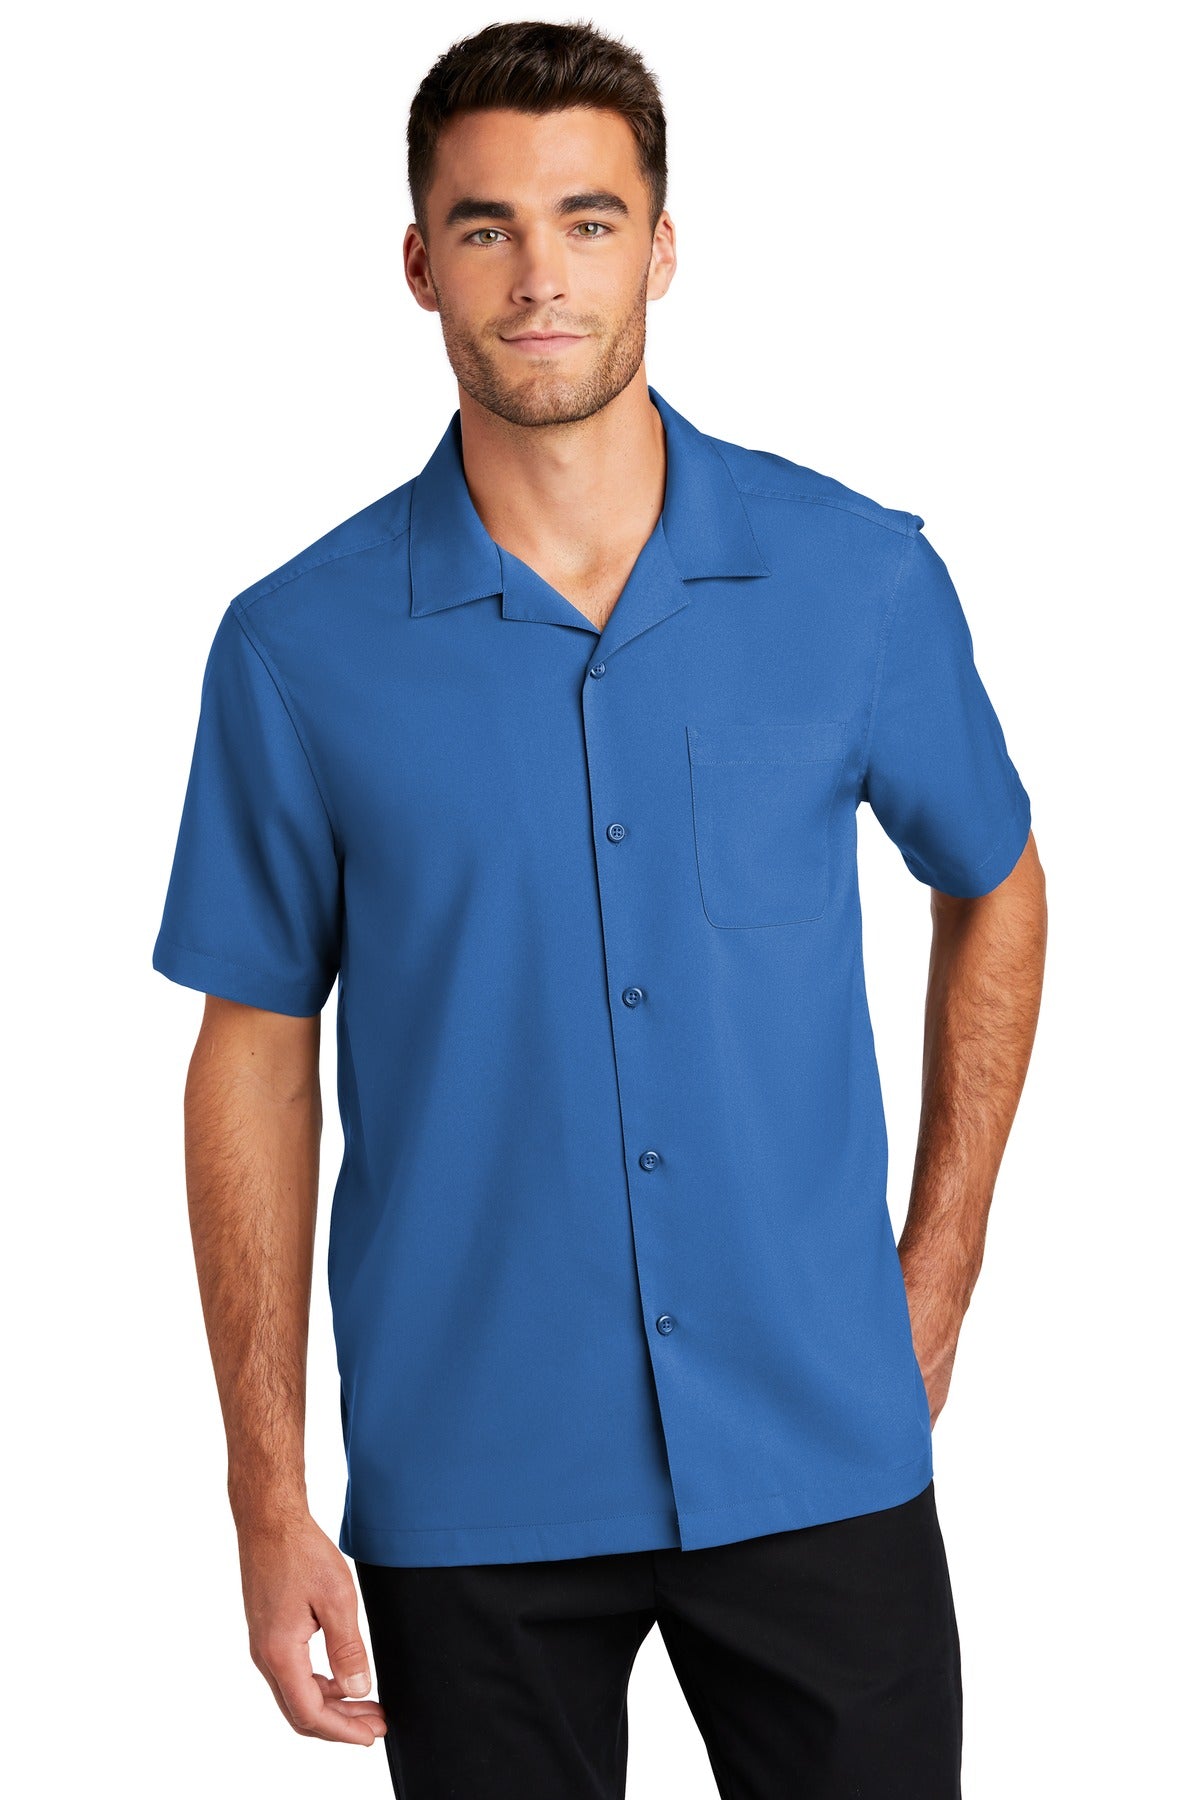 Woven Shirts True Blue Port Authority